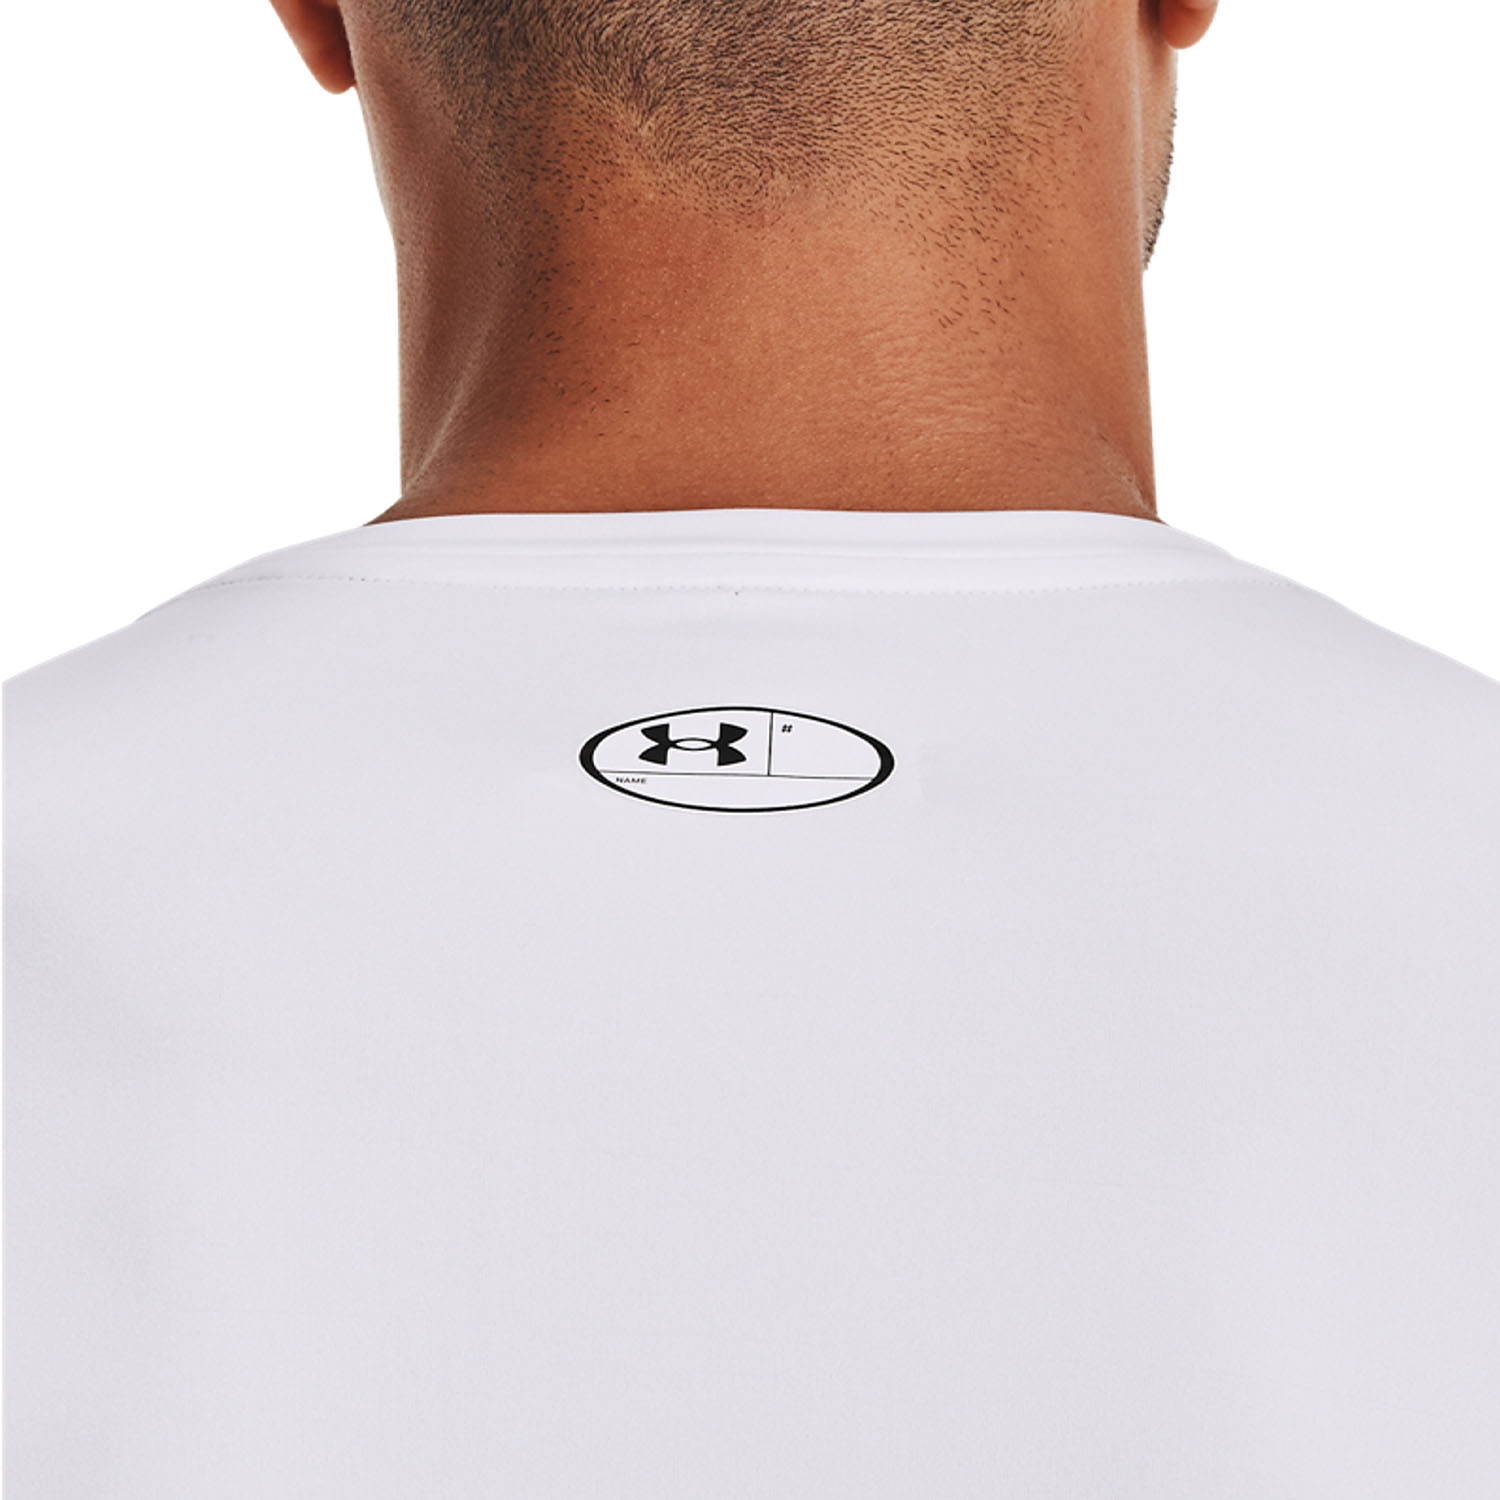 Under Armour HeatGear Logo Shirt - White/Black